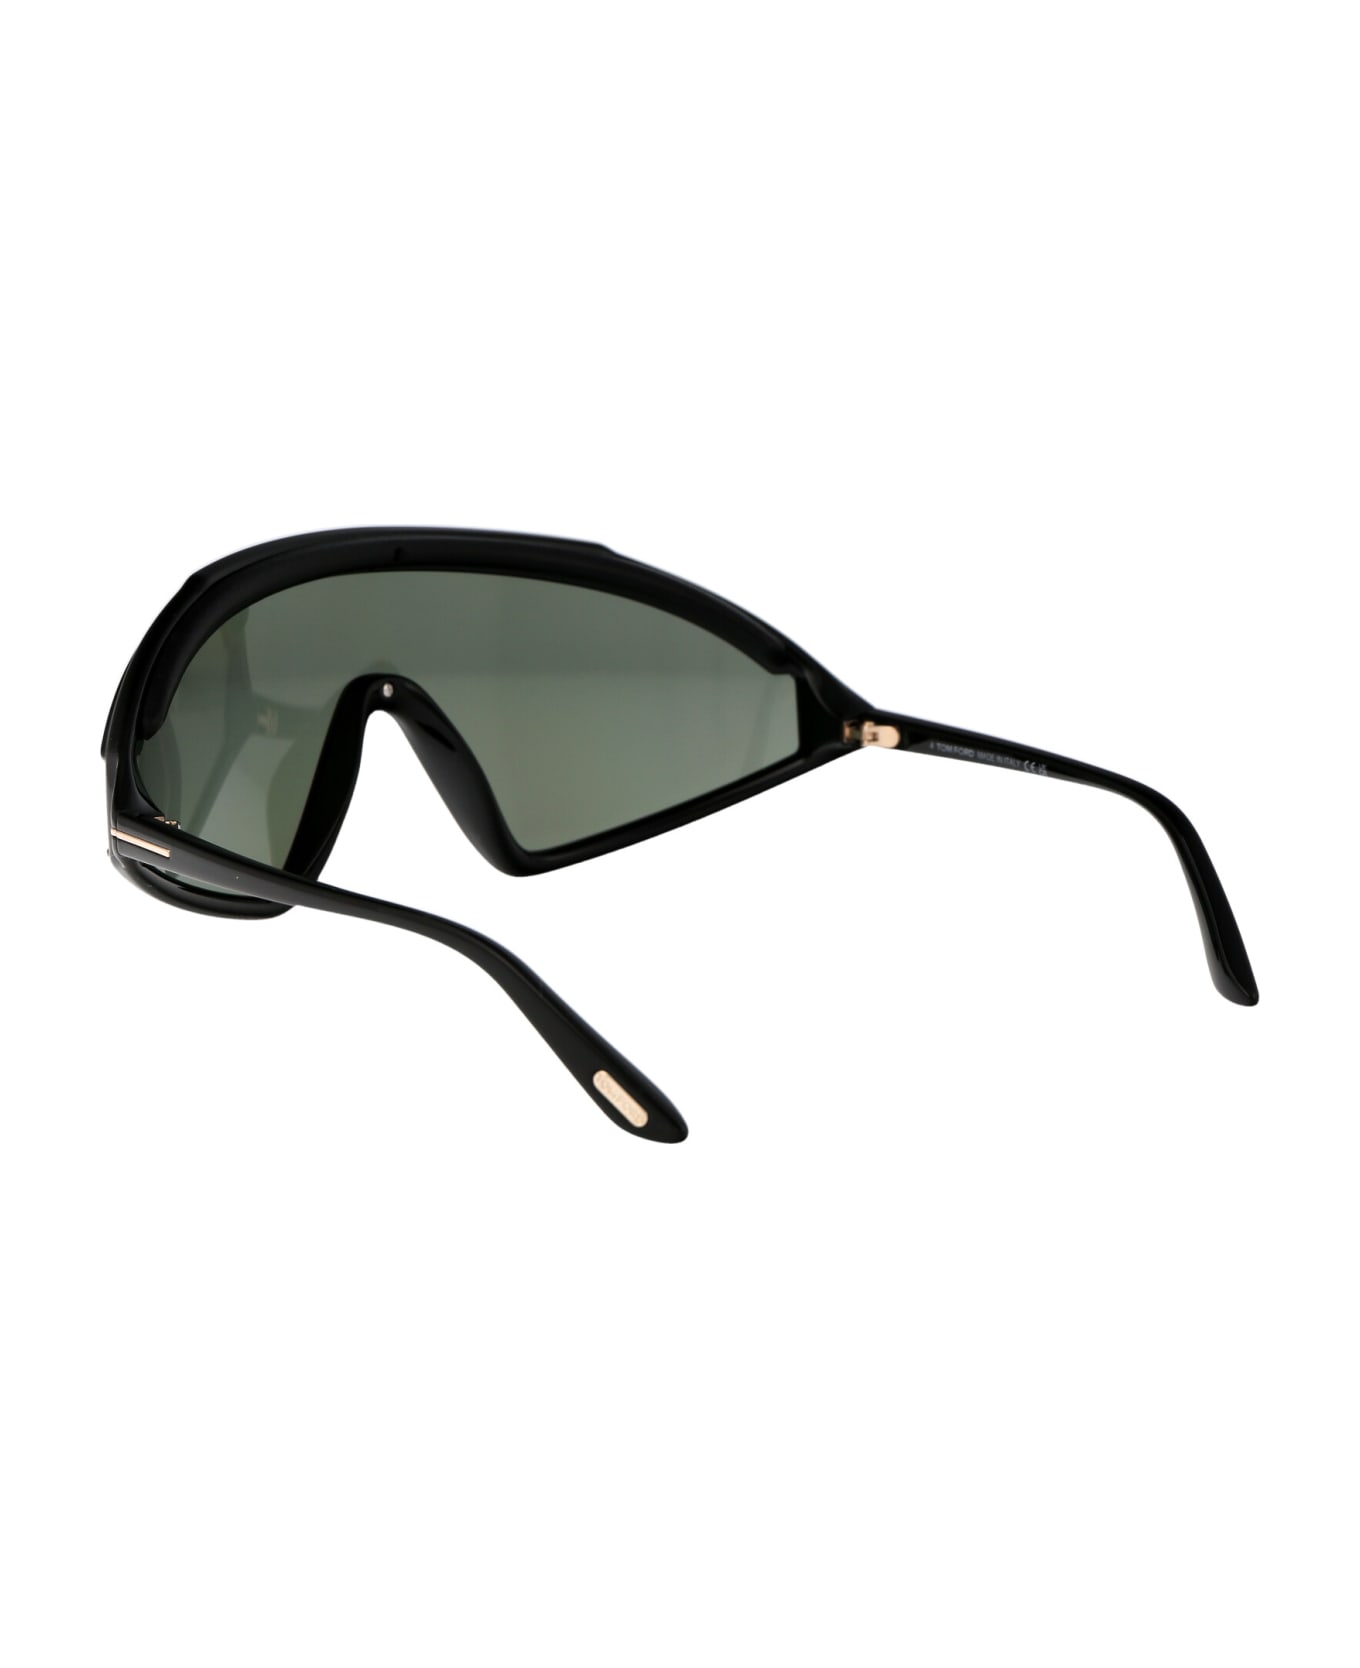 Tom Ford Eyewear Lorna Sunglasses - 05A Nero/Altro / Fumo サングラス